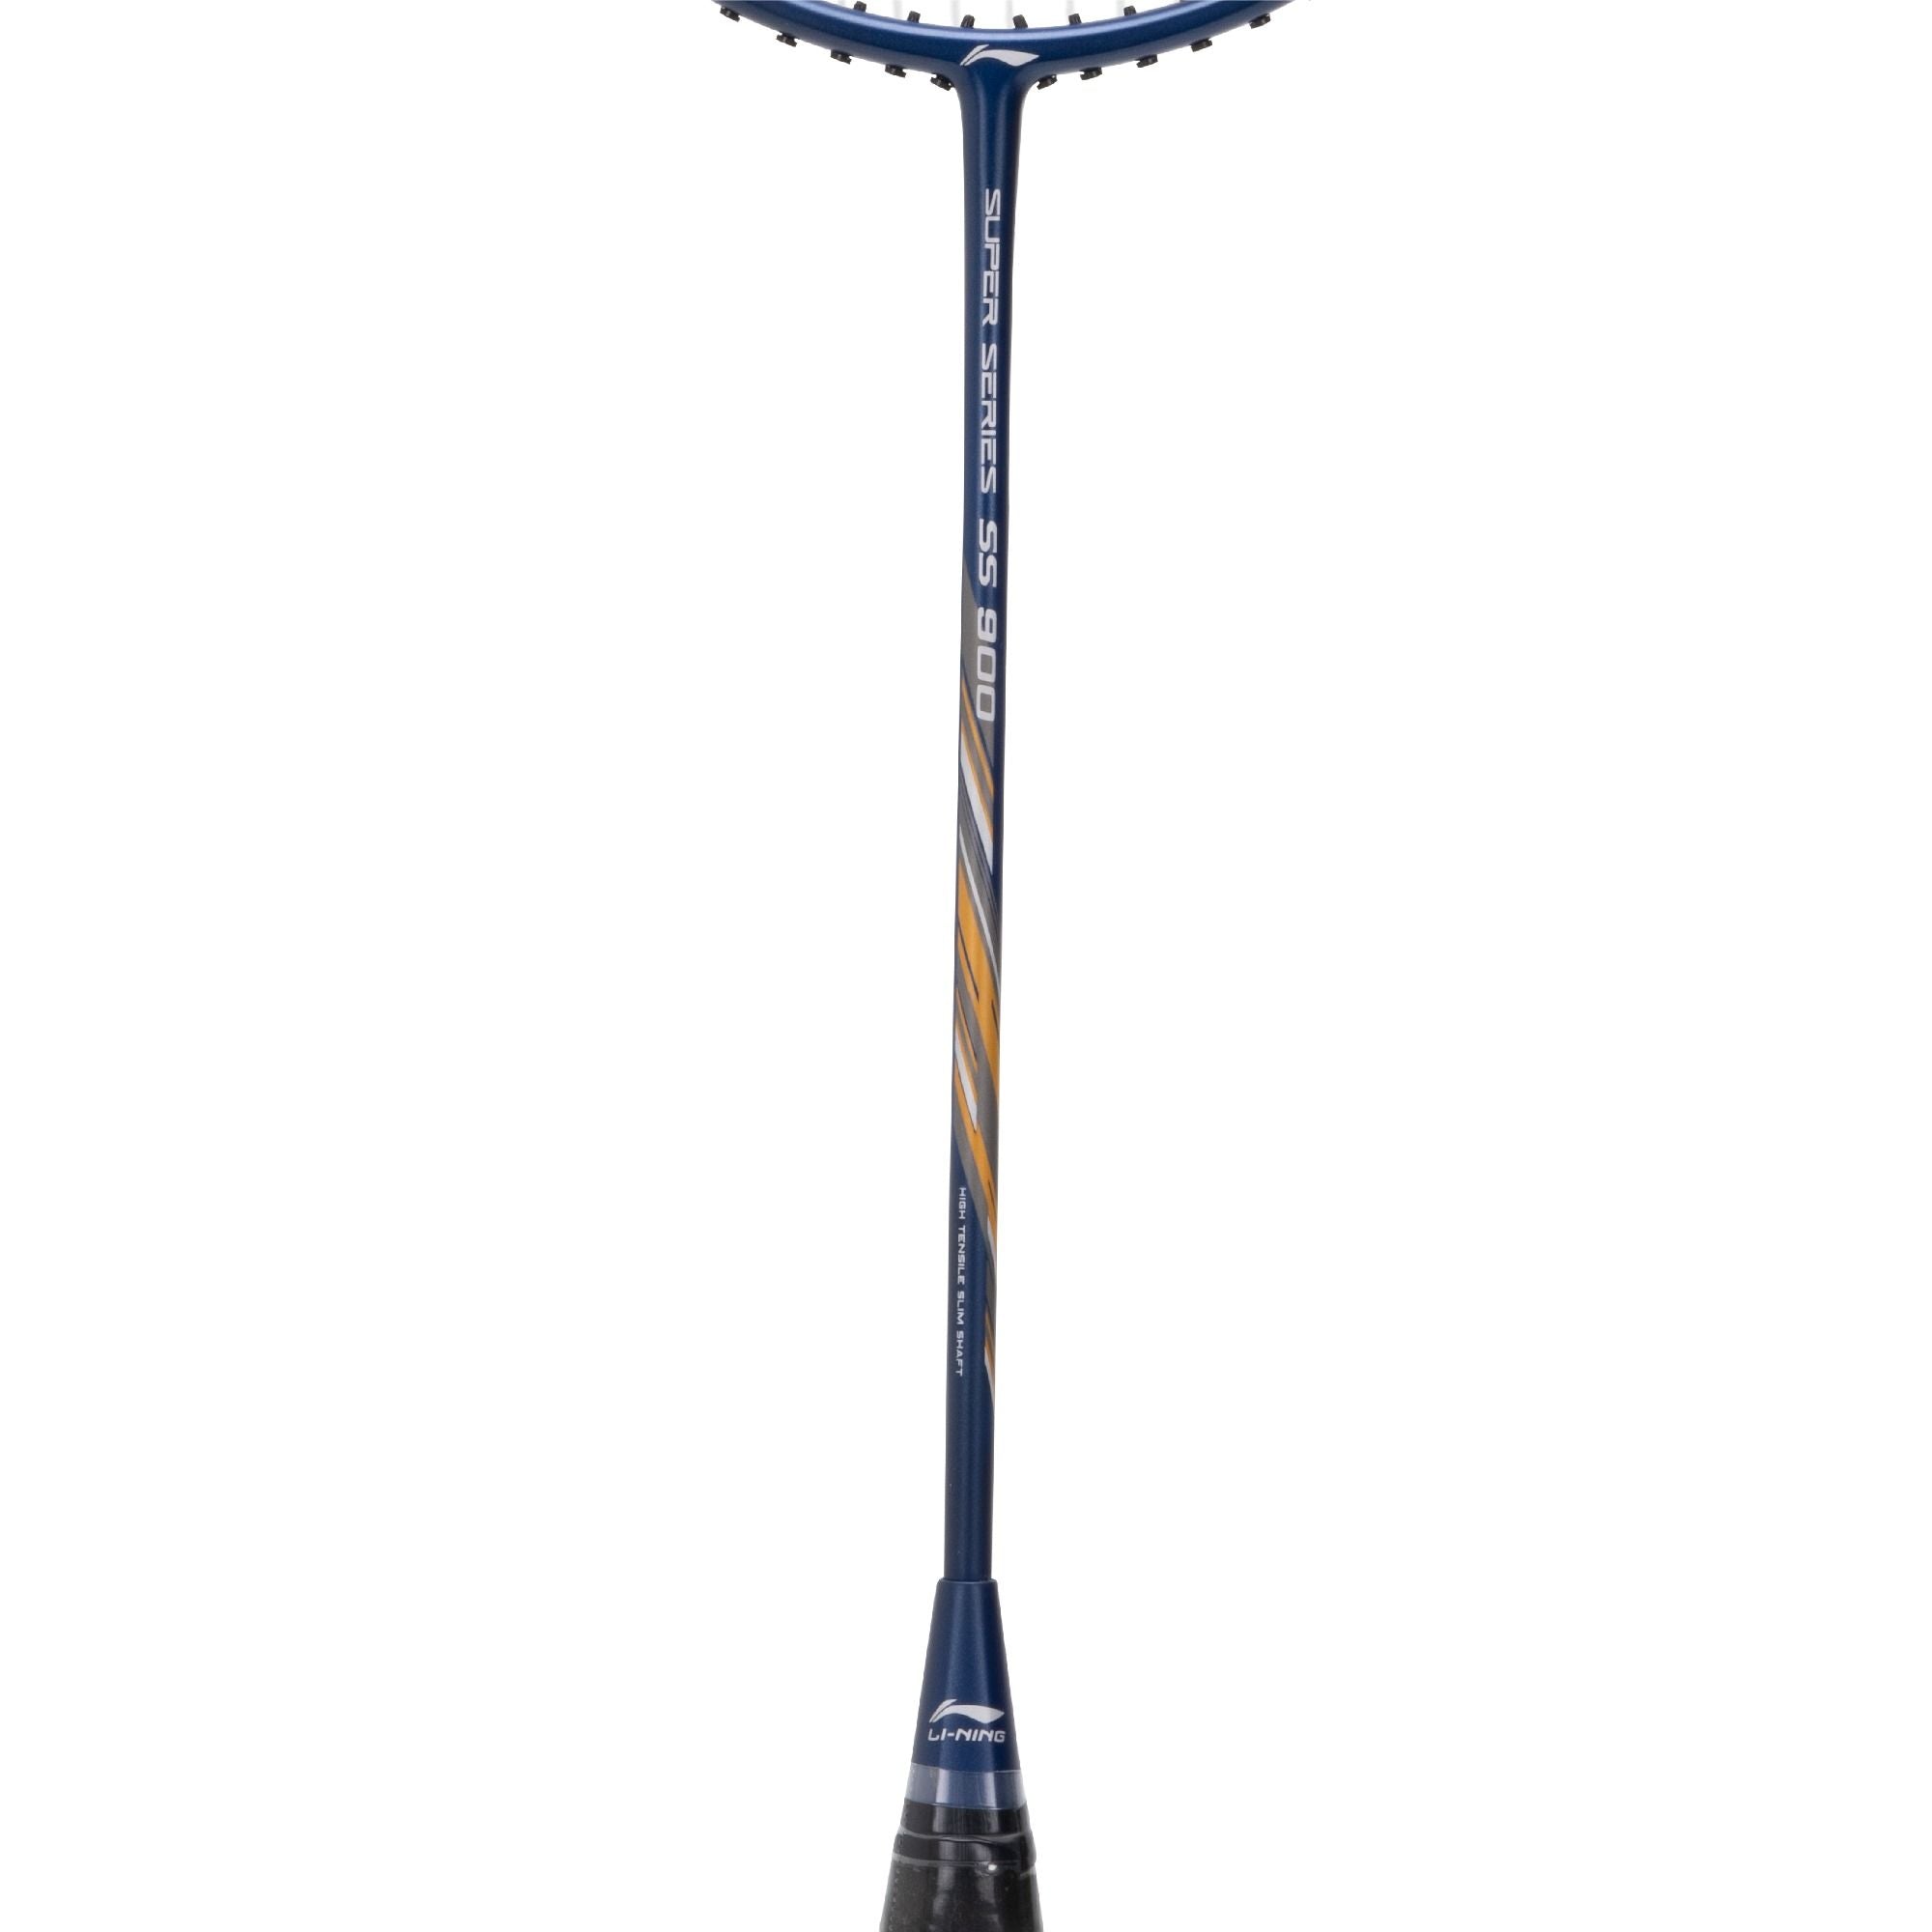 Li-Ning Super Series SS 900 (Navy/Gold) Badminton Racket